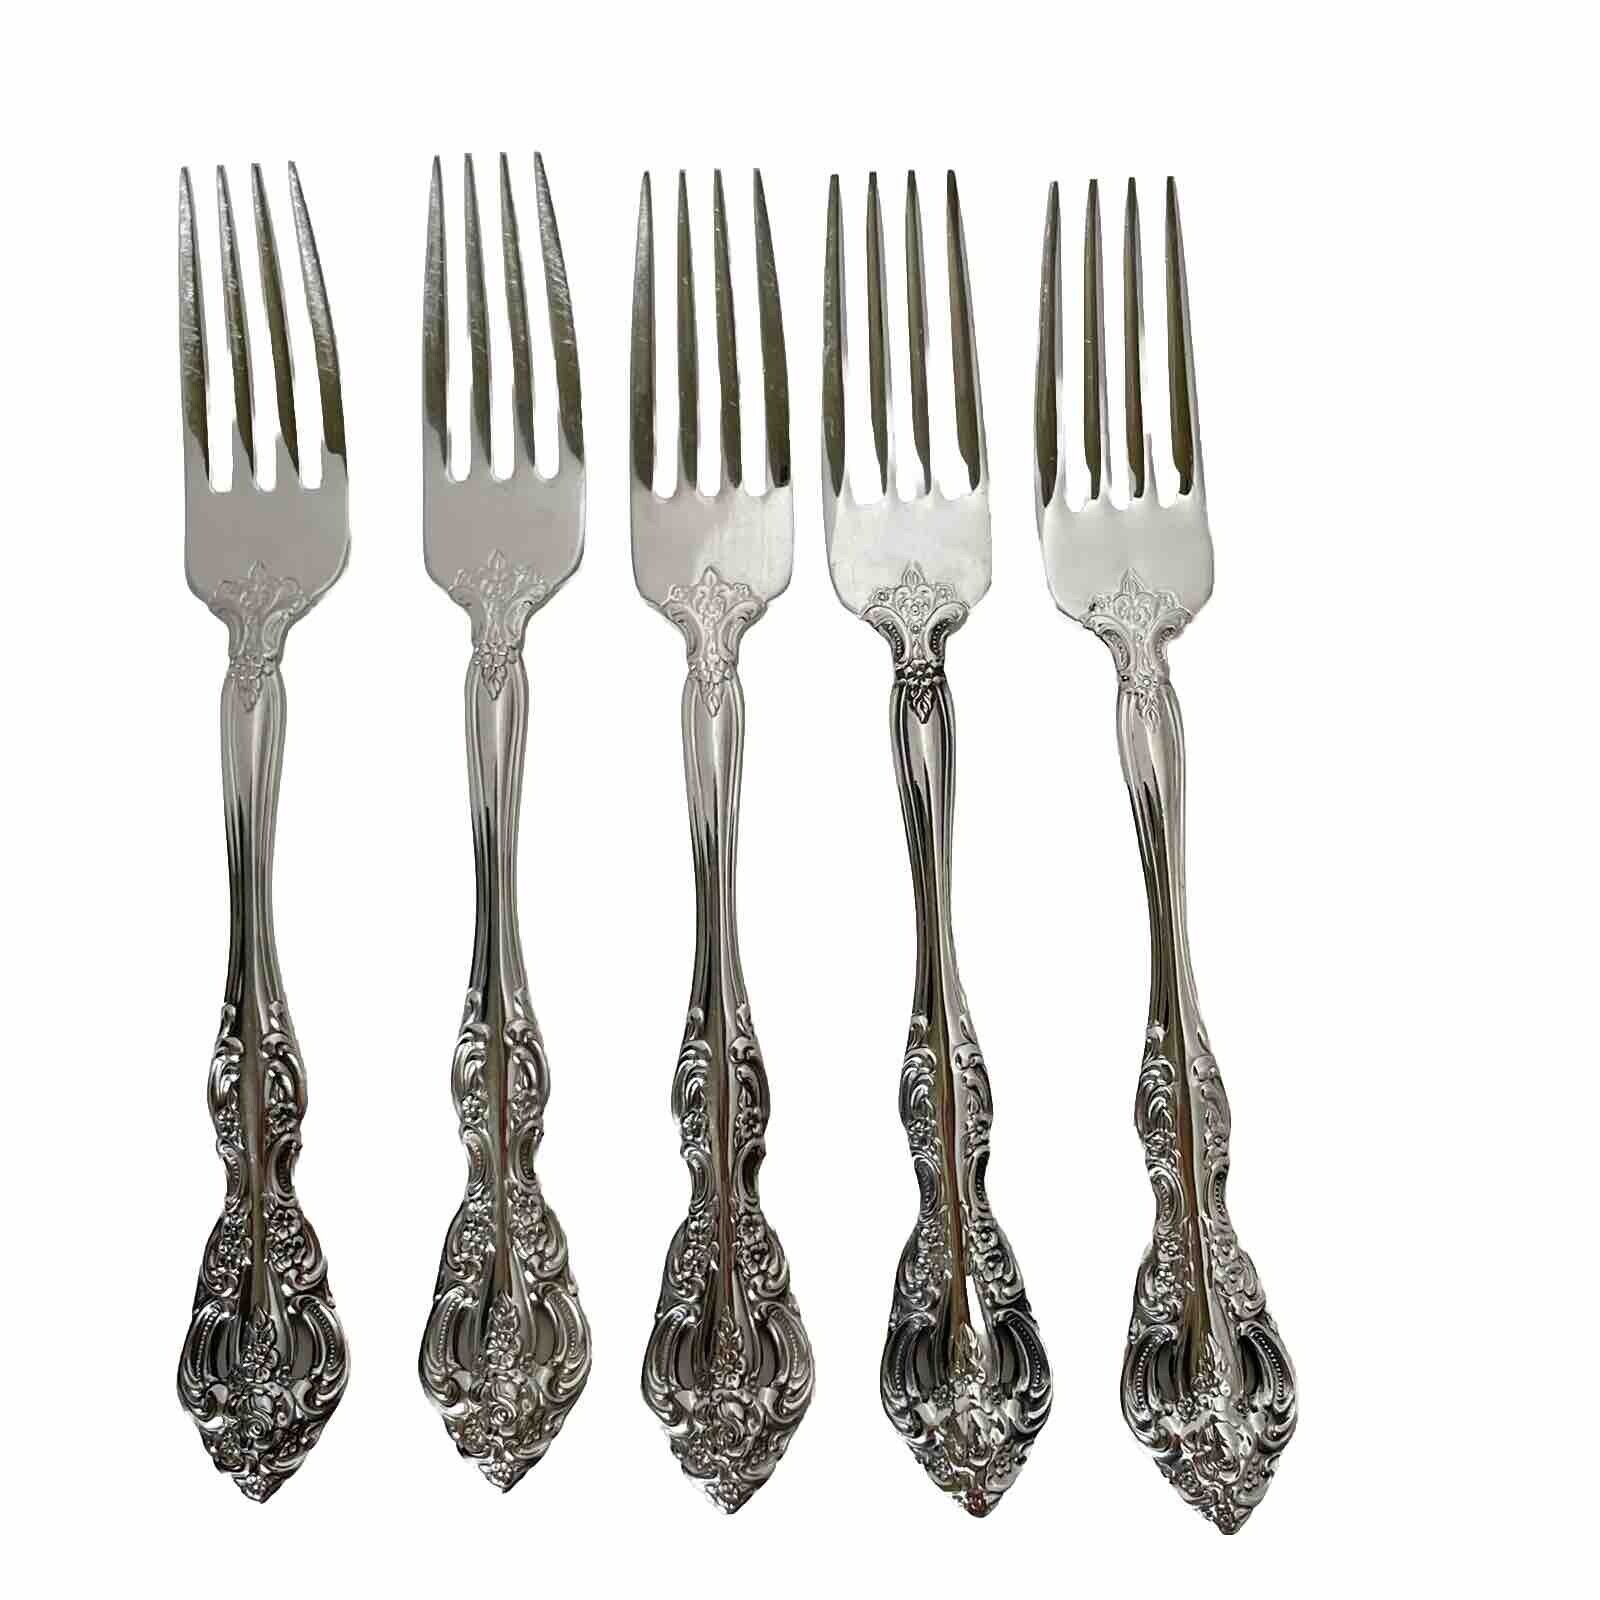 Set of 5 Oneida USA Stainless Silverware MICHELANGELO Pattern Dinner Forks-7 1/4